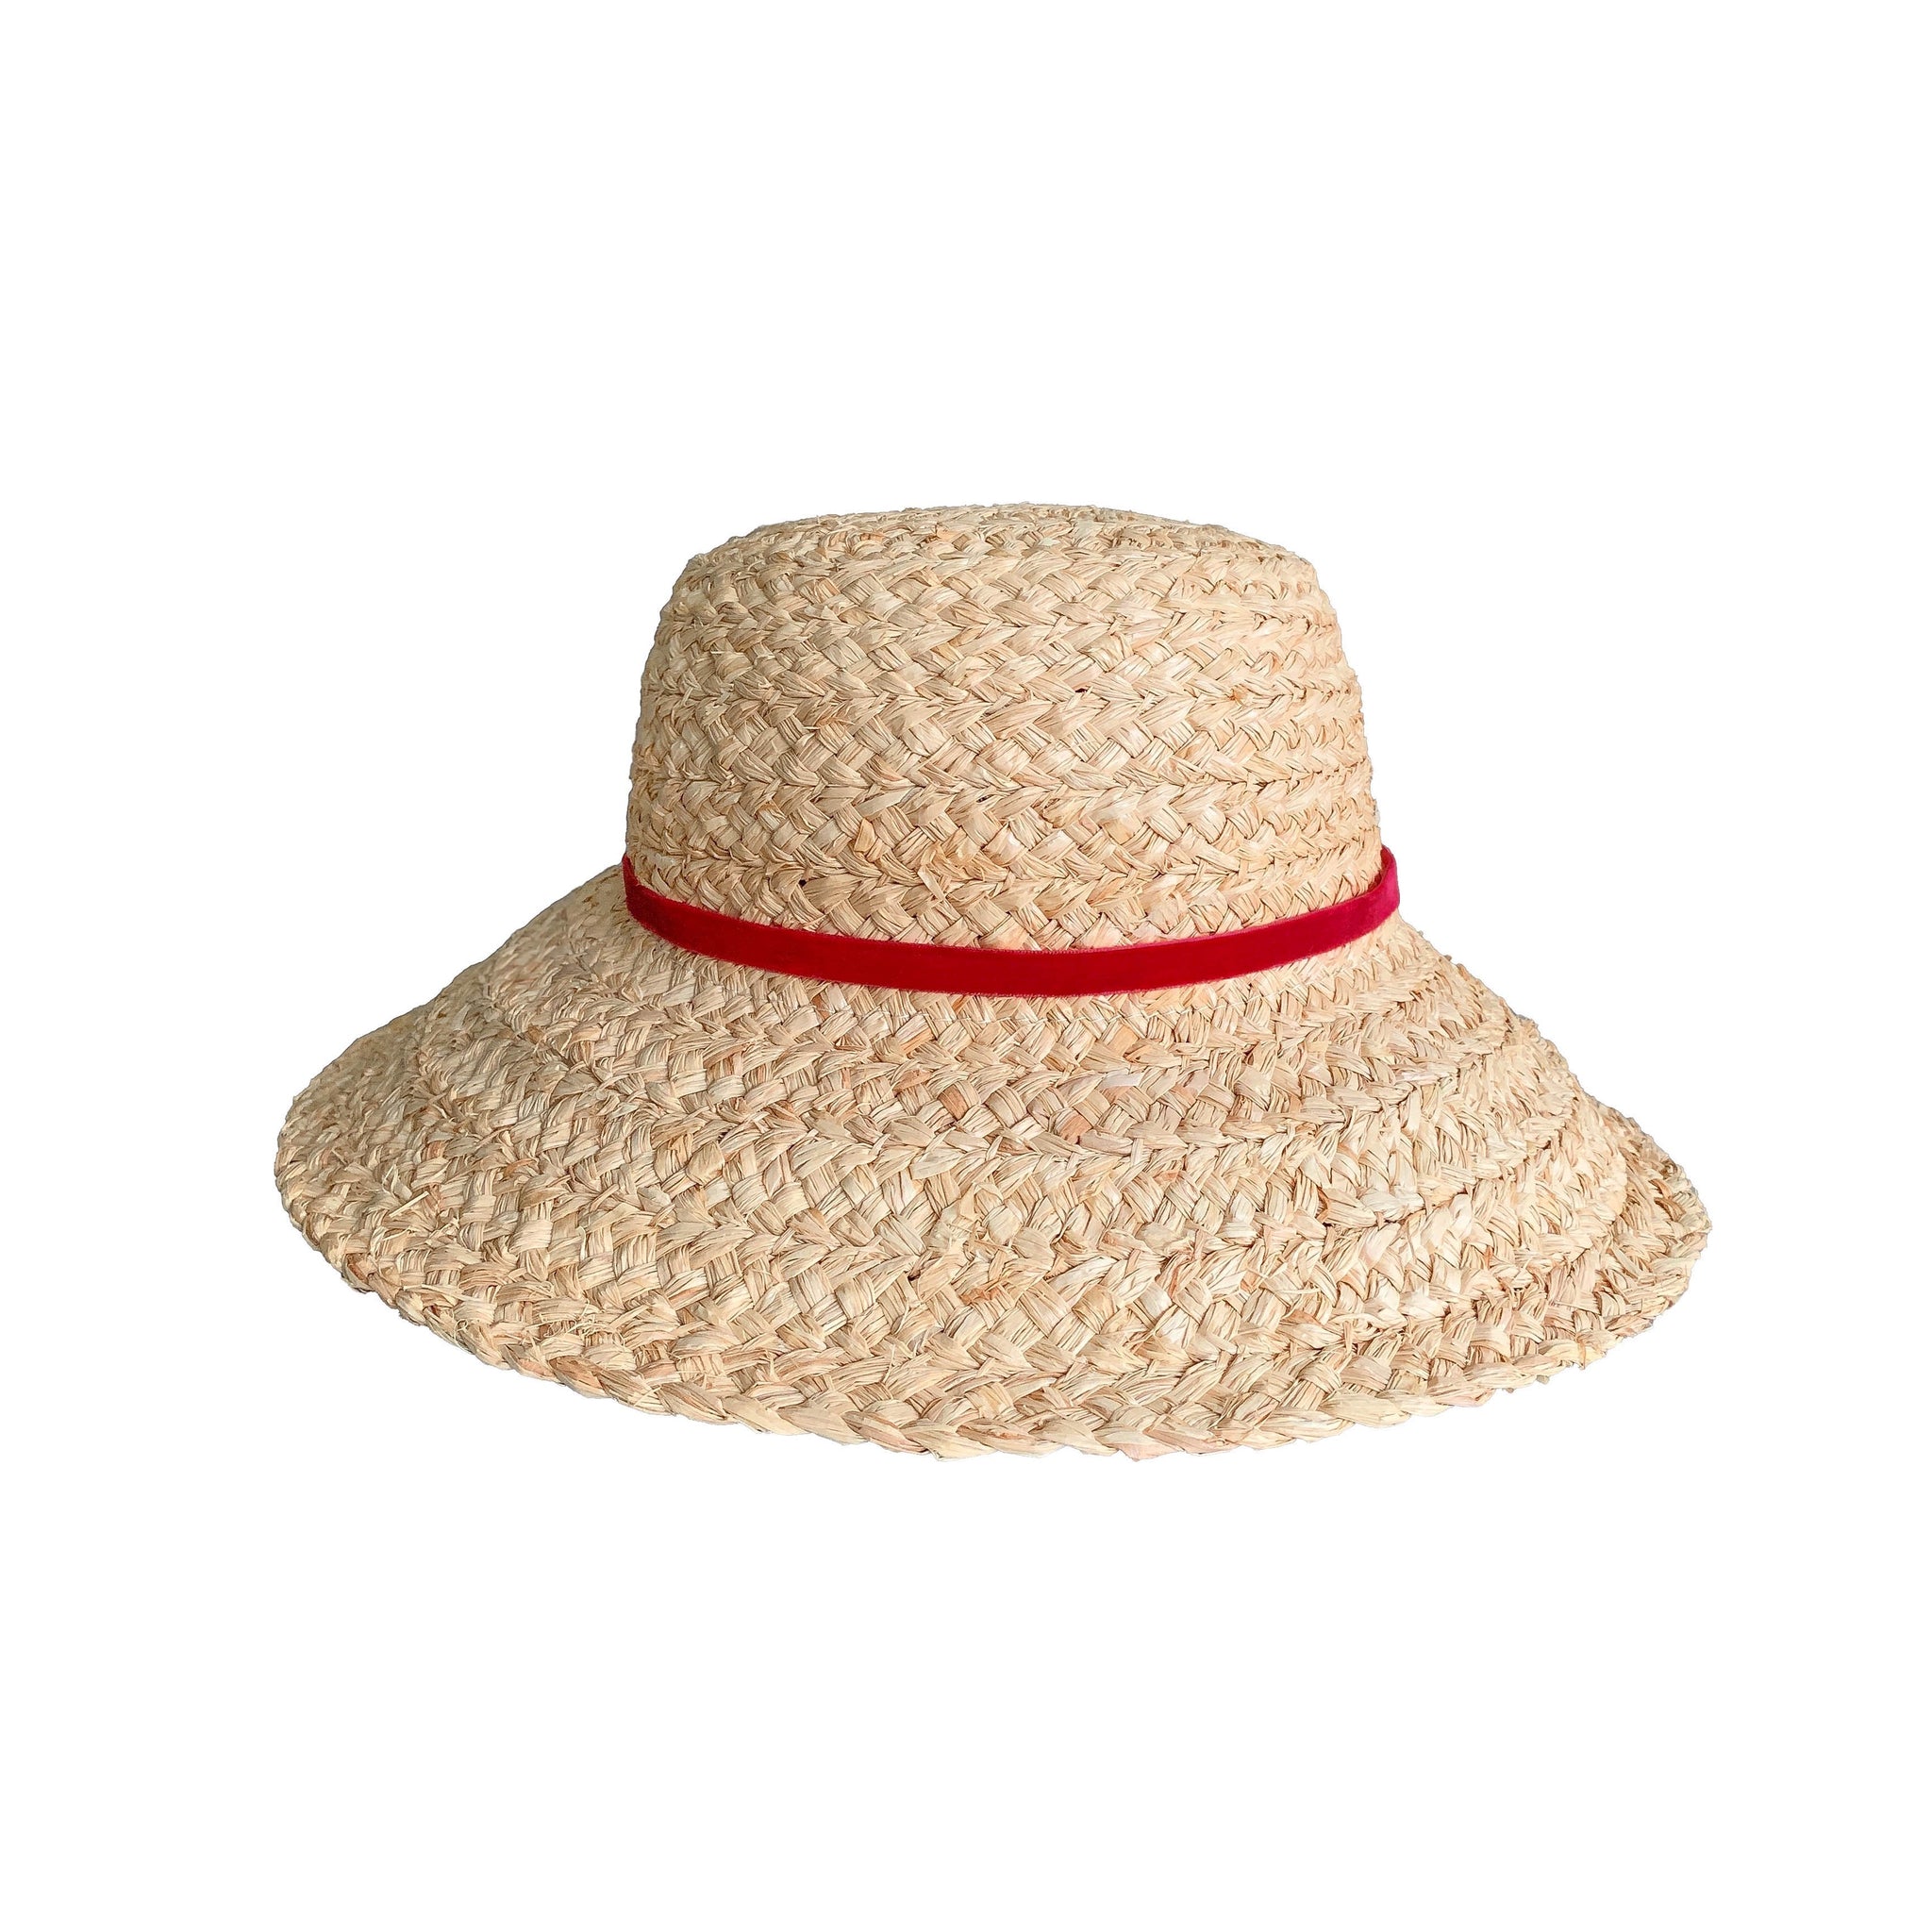 bella straw hat | summer hat | fedora hat by tanya litkovska